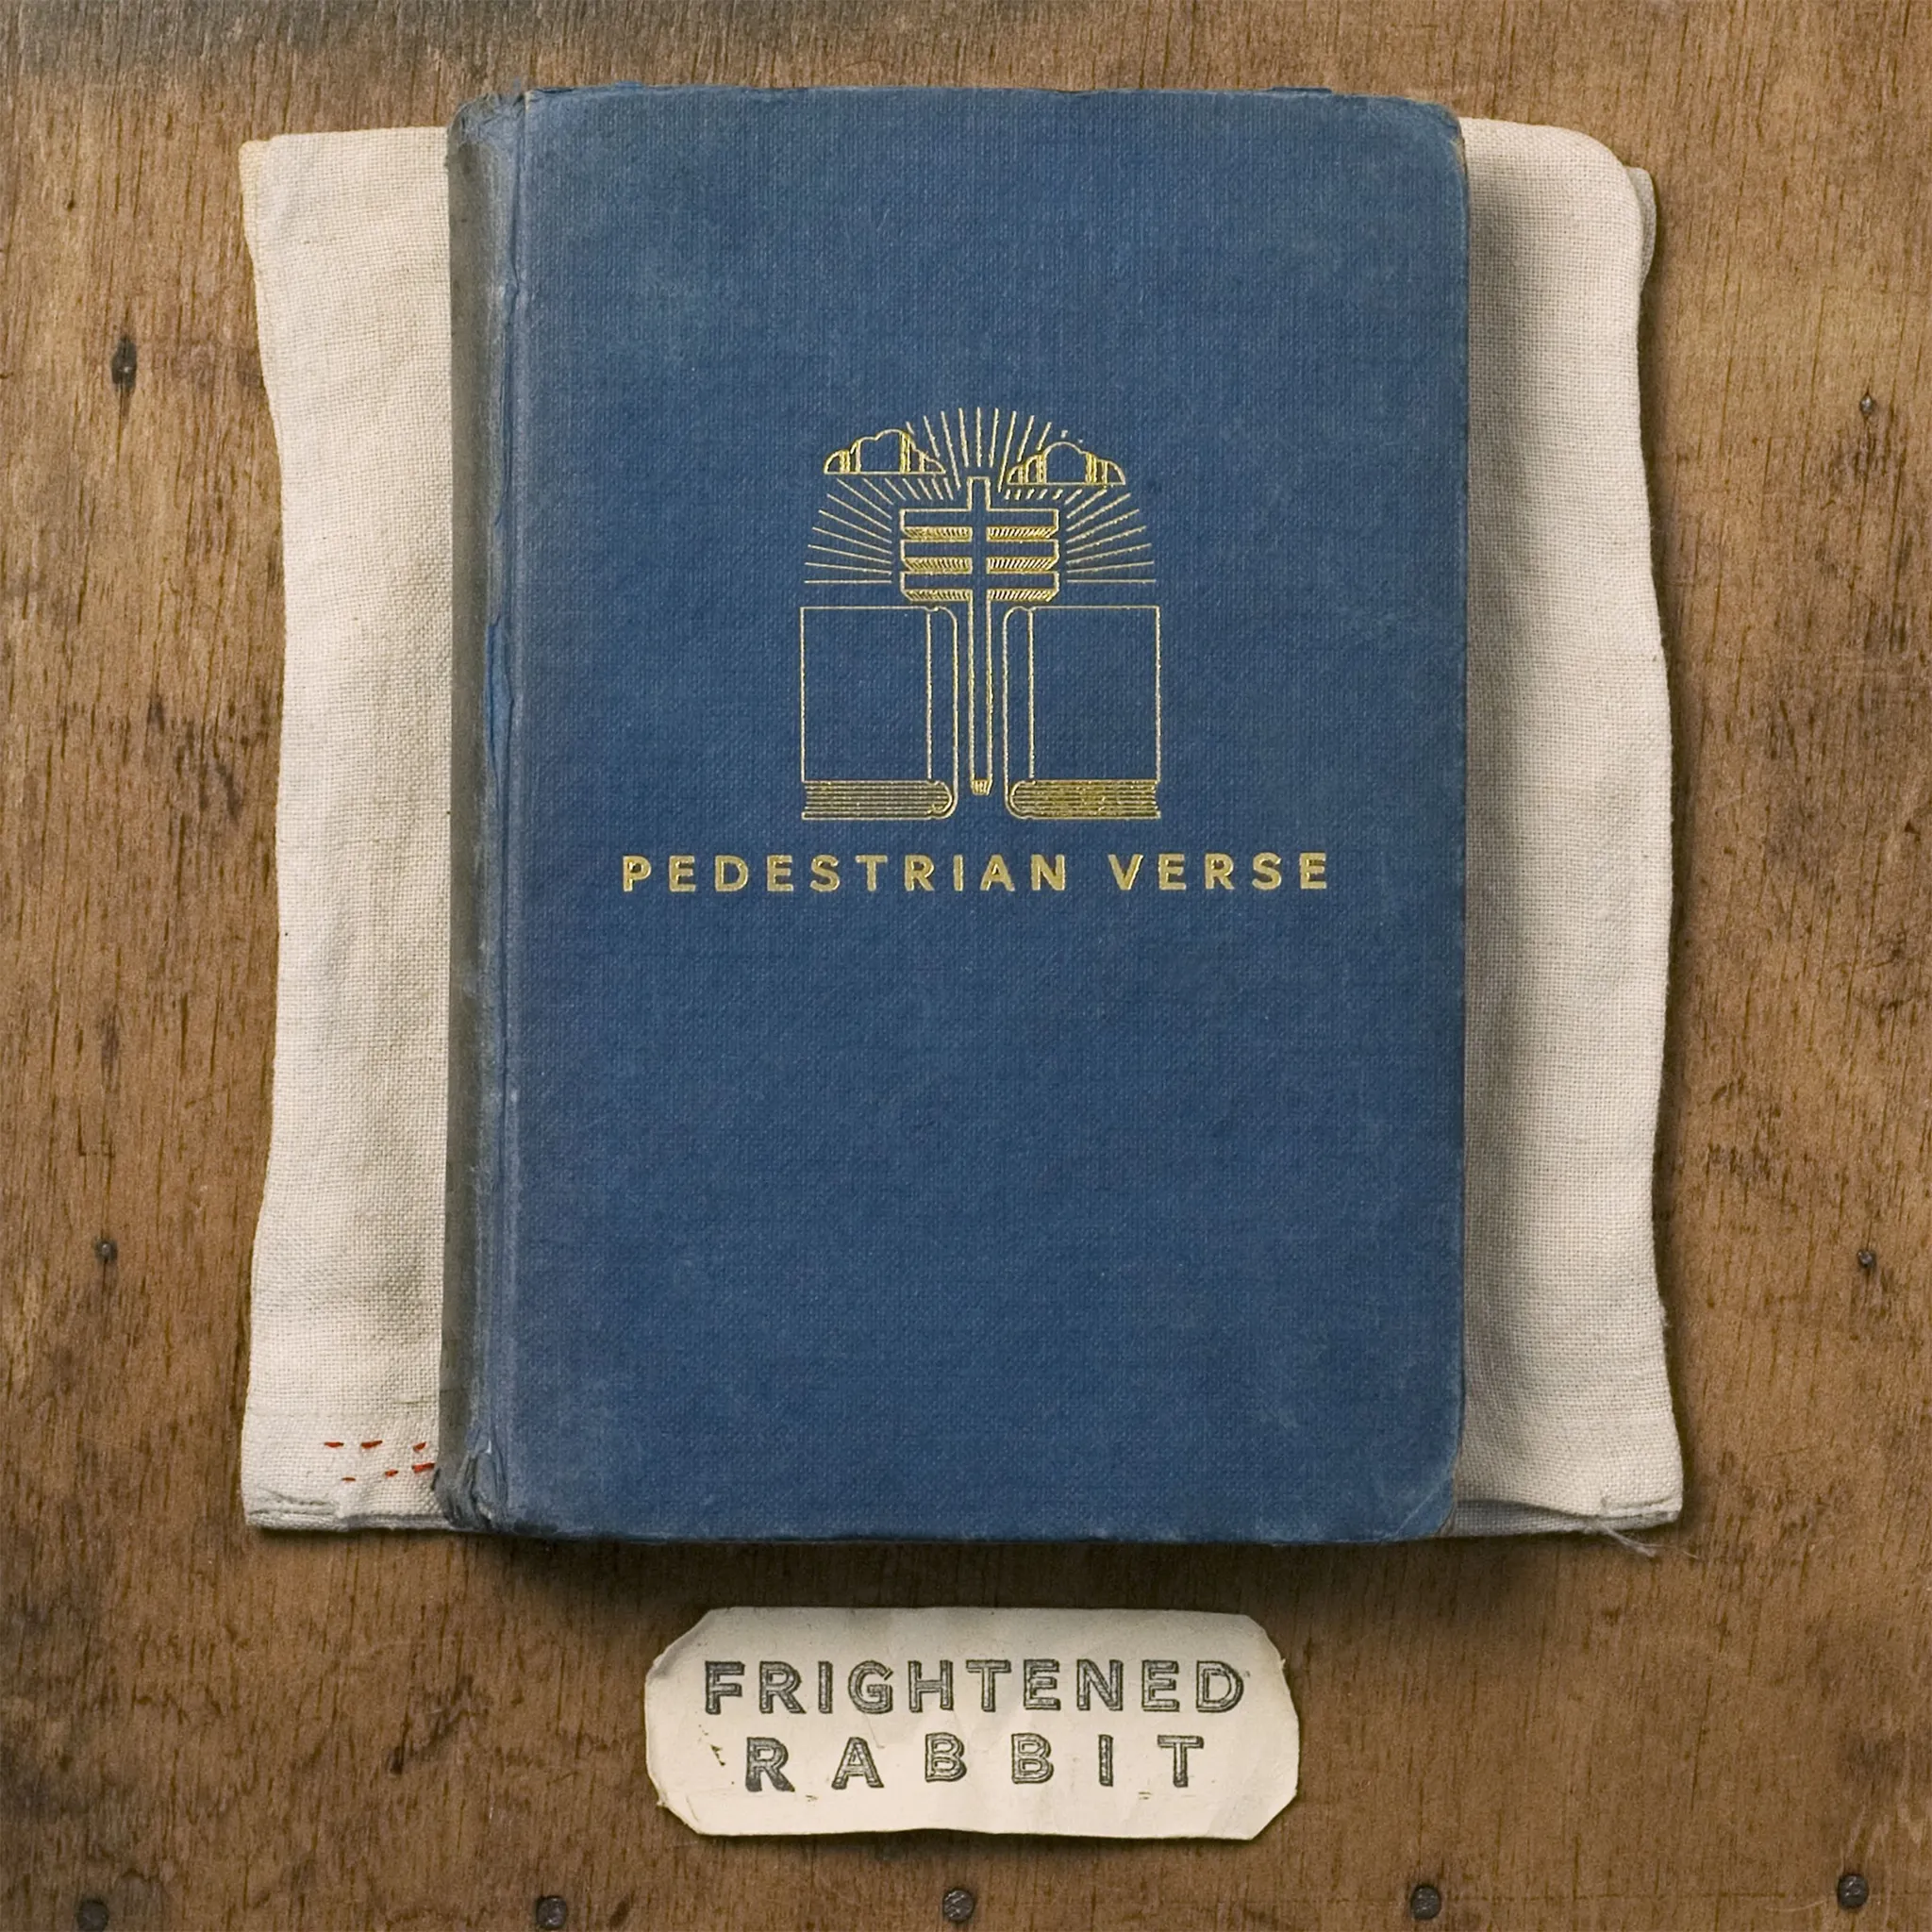 <strong>Frightened Rabbit - Pedestrian Verse (10th Anniversary Edition)</strong> (Vinyl LP - blue)